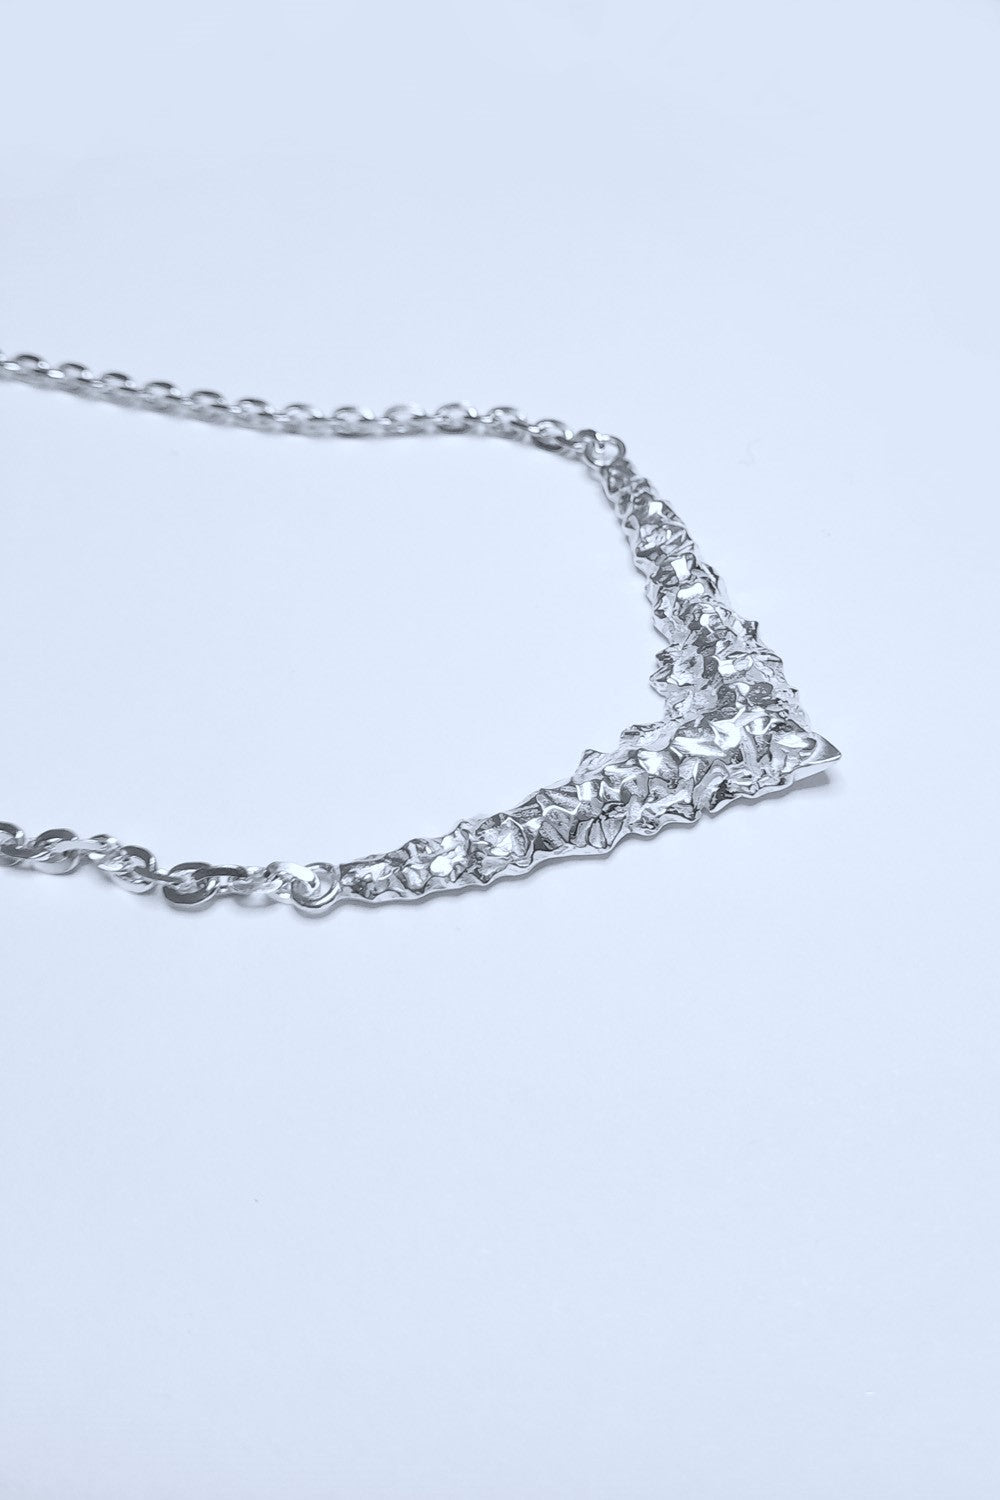 Vanadis necklace from Annika Burman